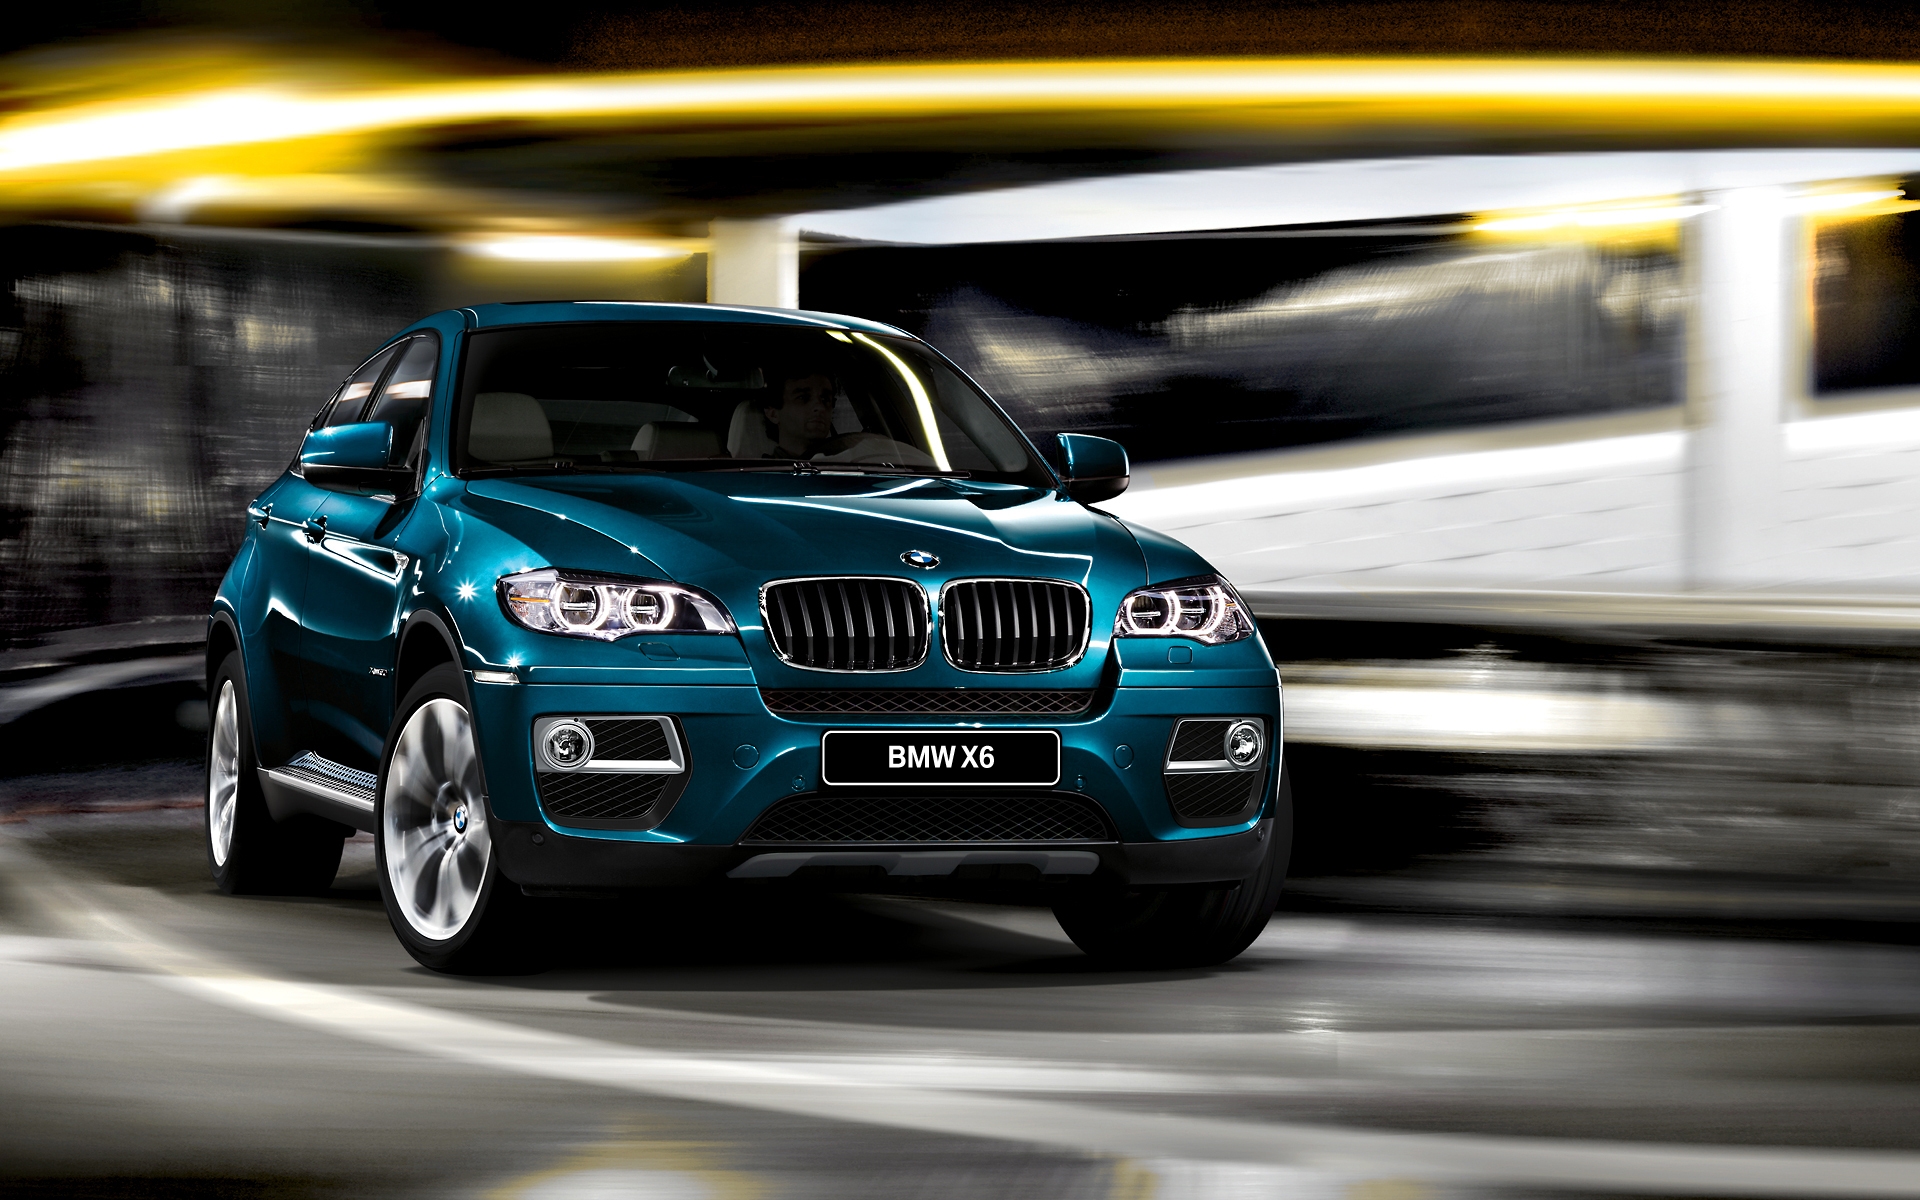 BMW X6 HD Wallpaper | Background Image | 1920x1200 | ID ...